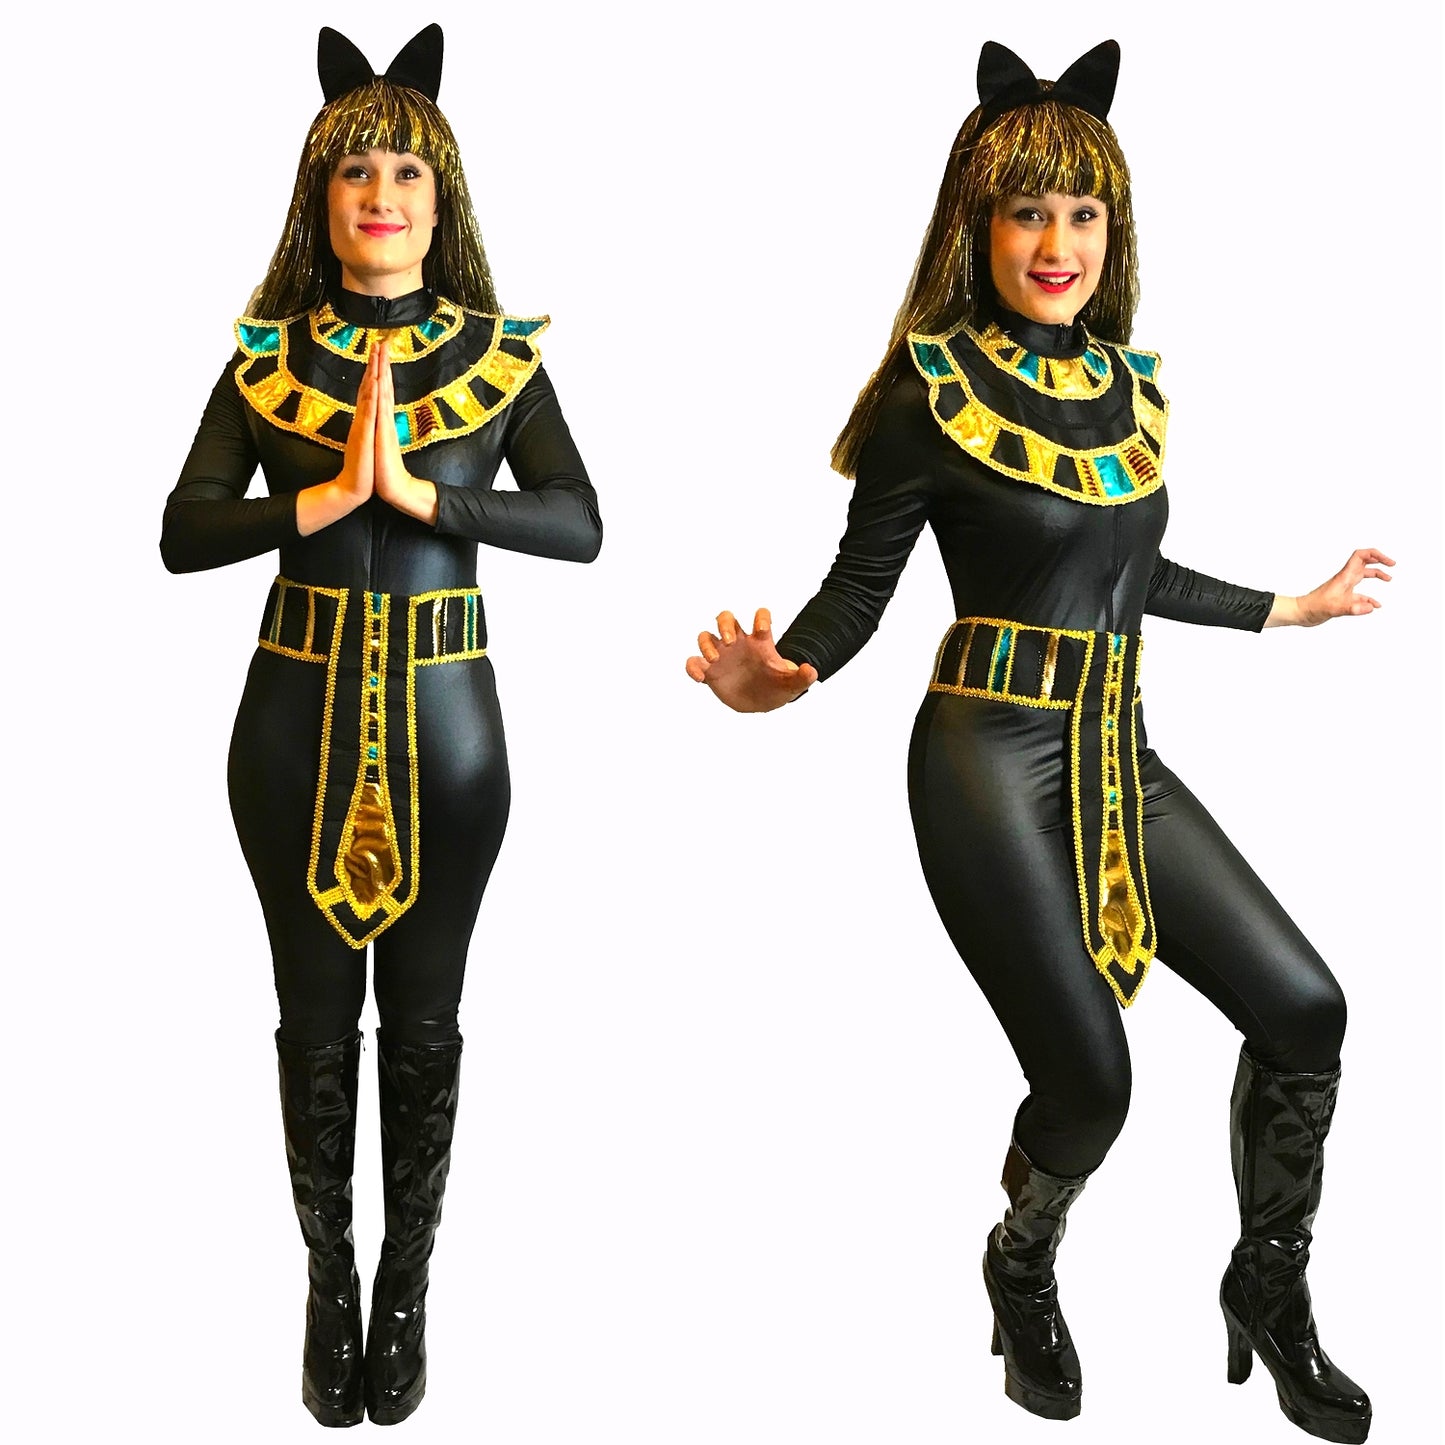 Cleopatra Egypt Fancy Dress Costume.jpg